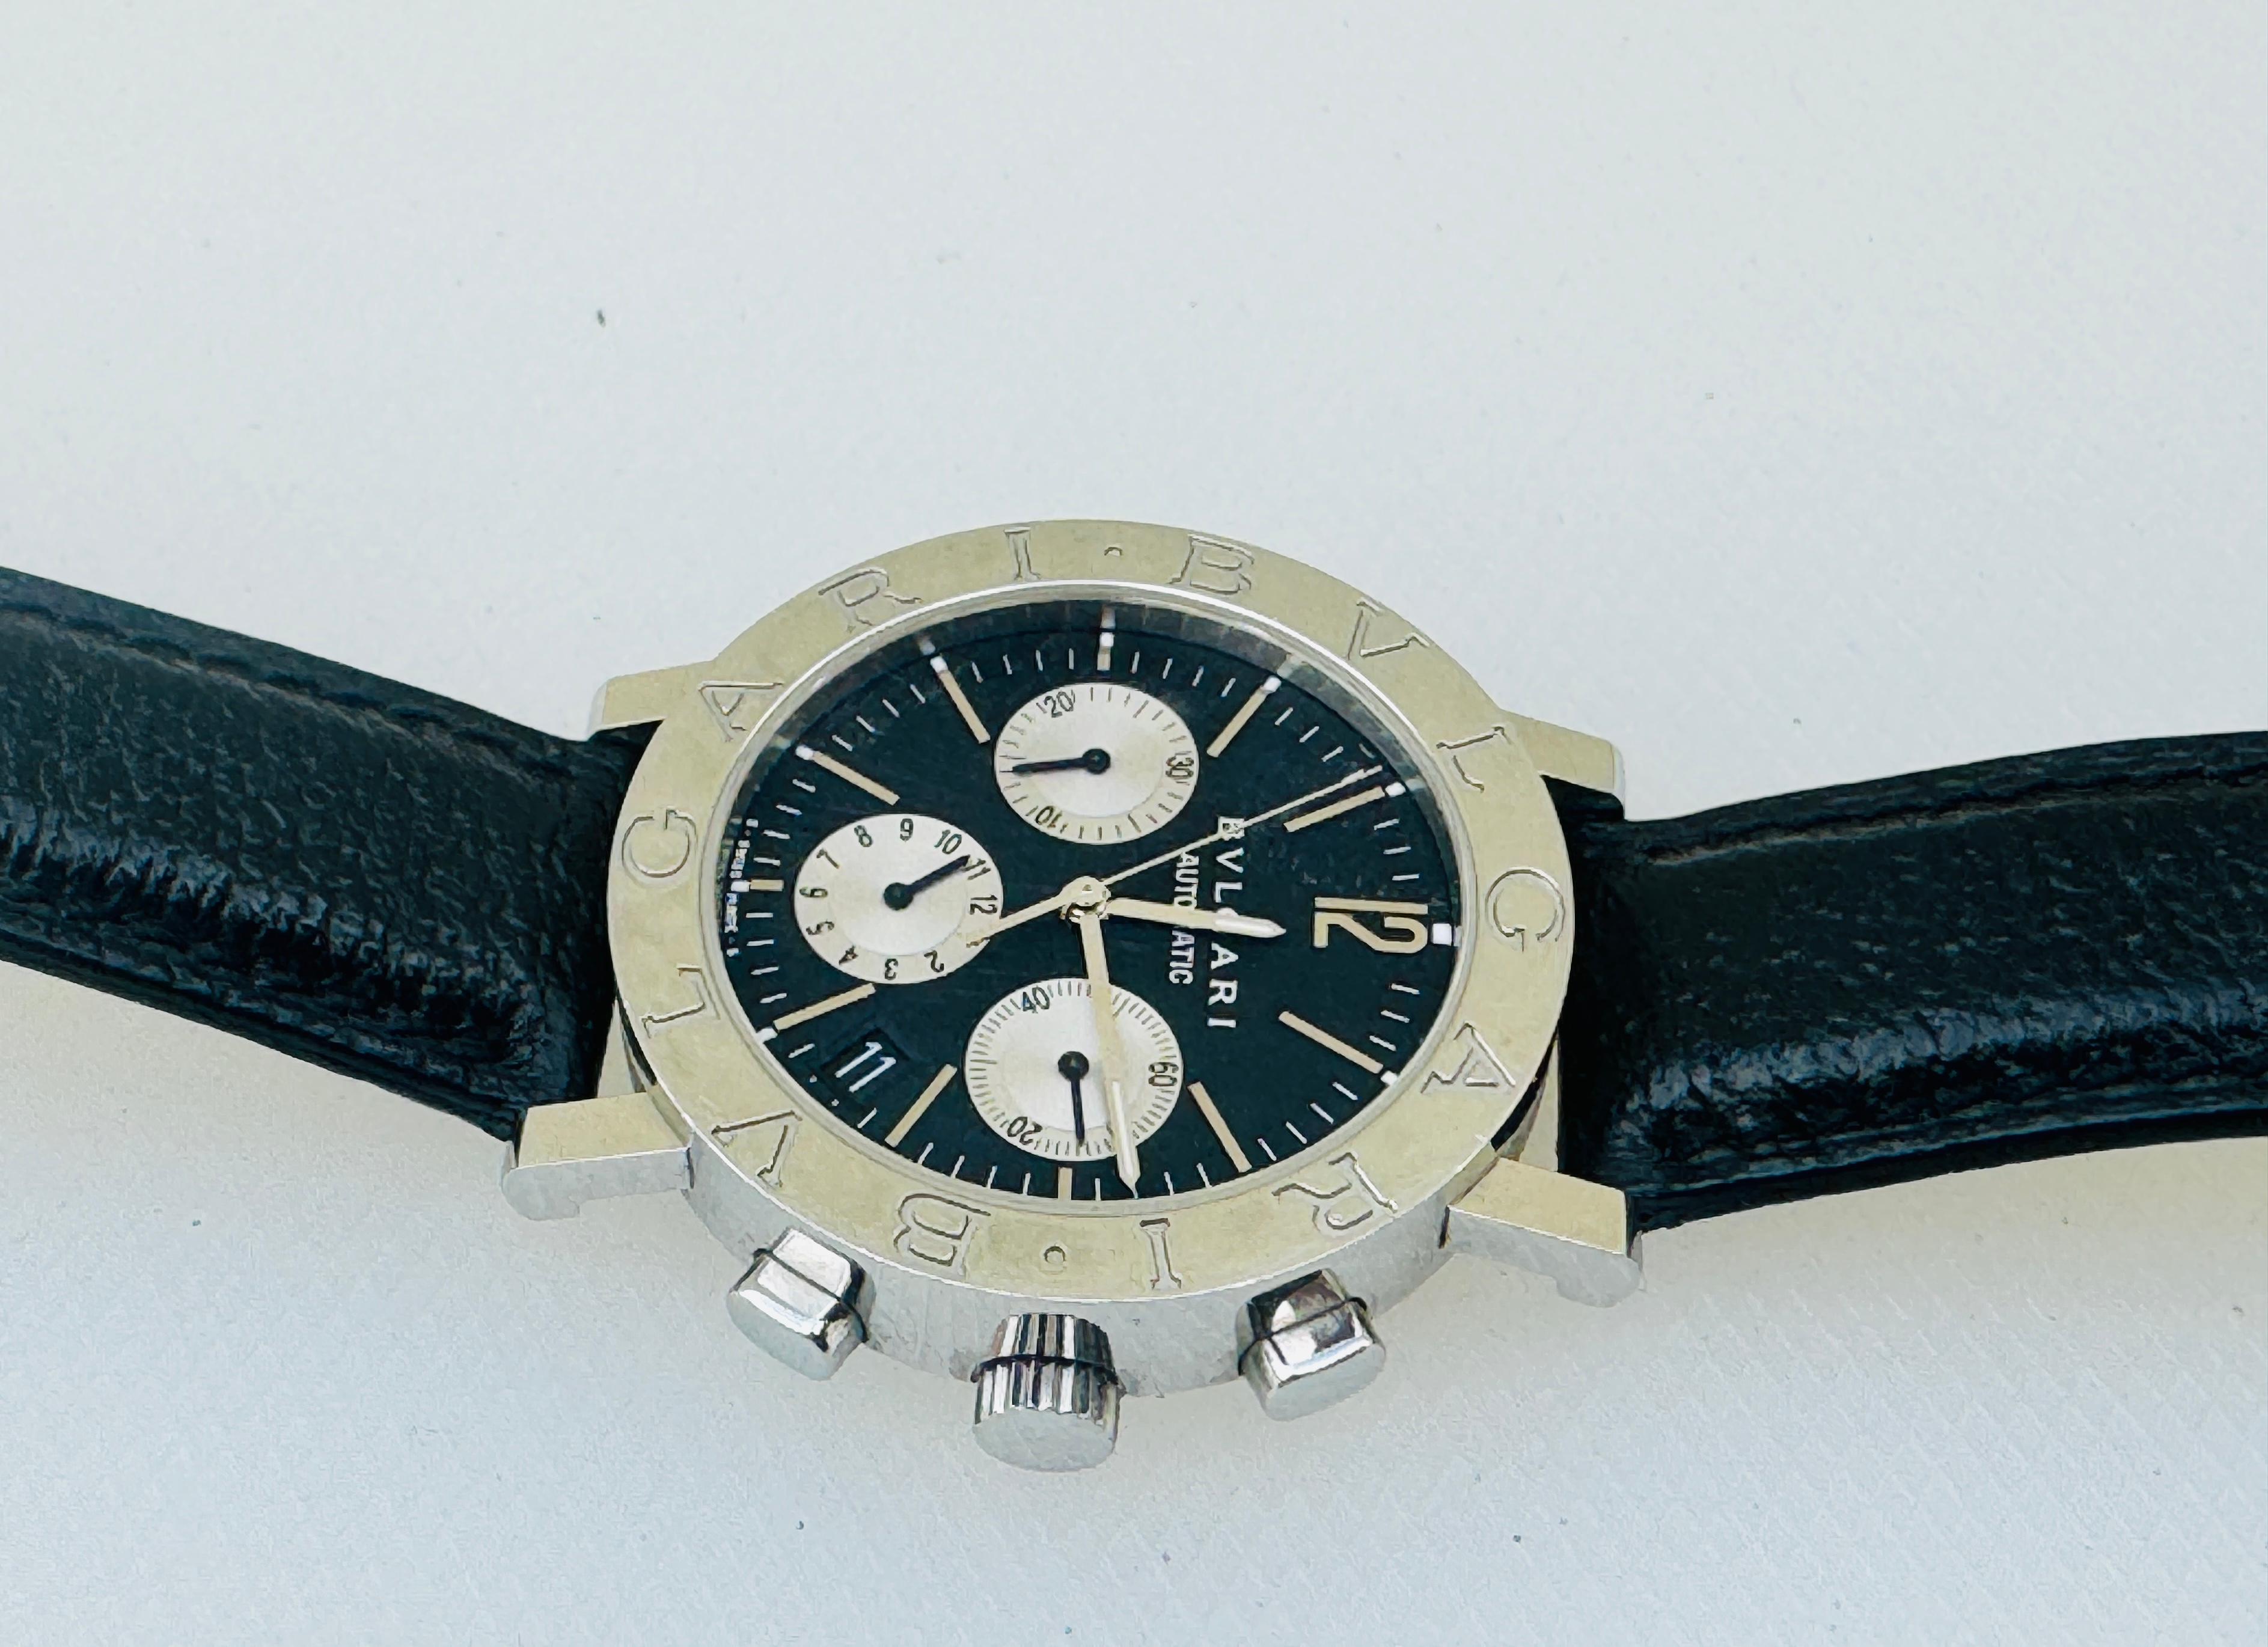 Bulgari Diagono Bvlgari Chronograph Automatic Watch For Sale 9